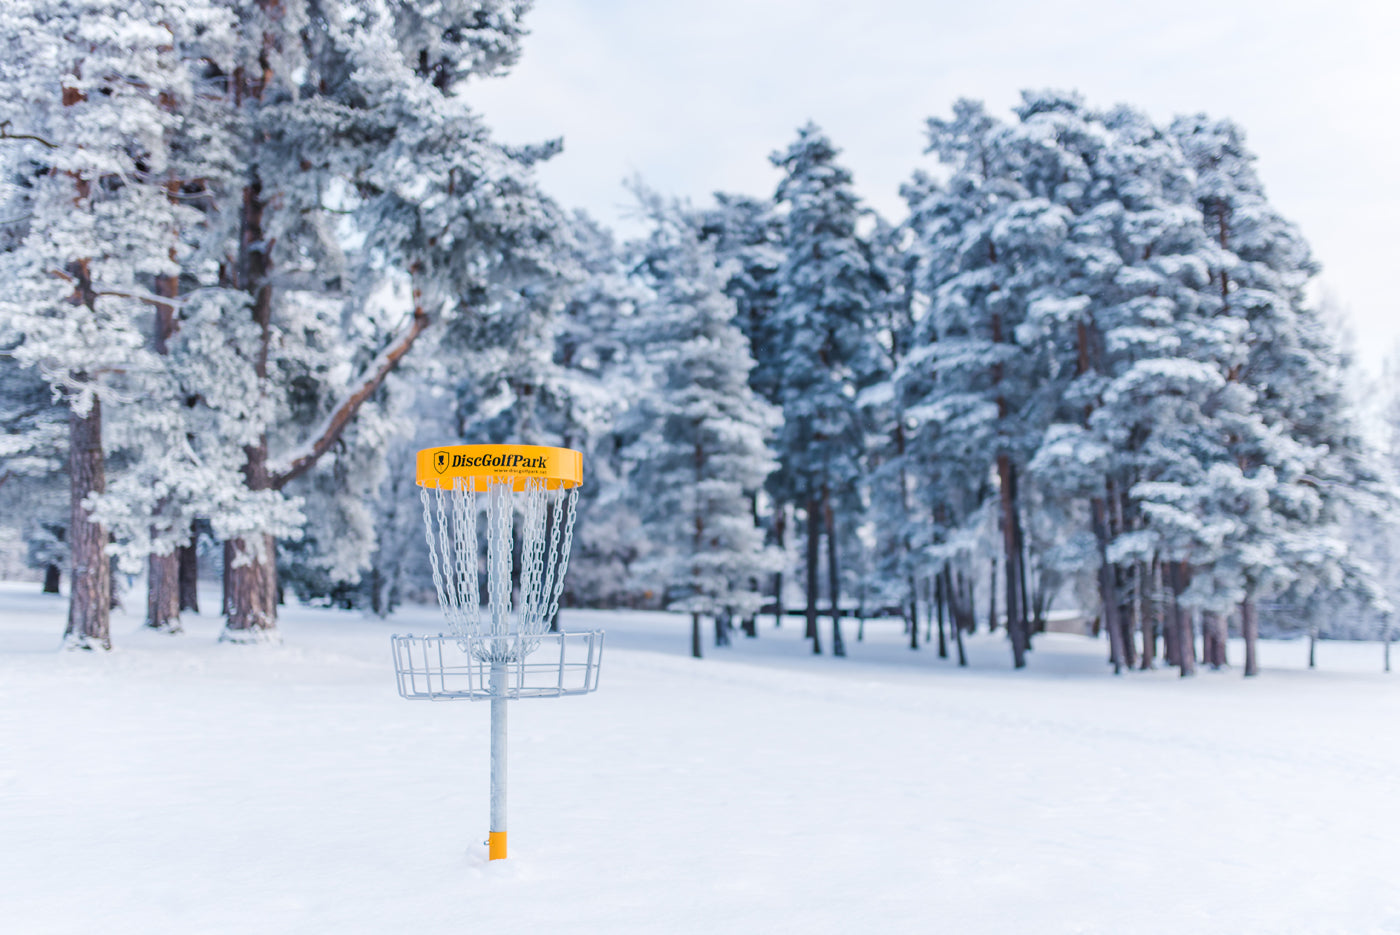 Snowy disc golf course